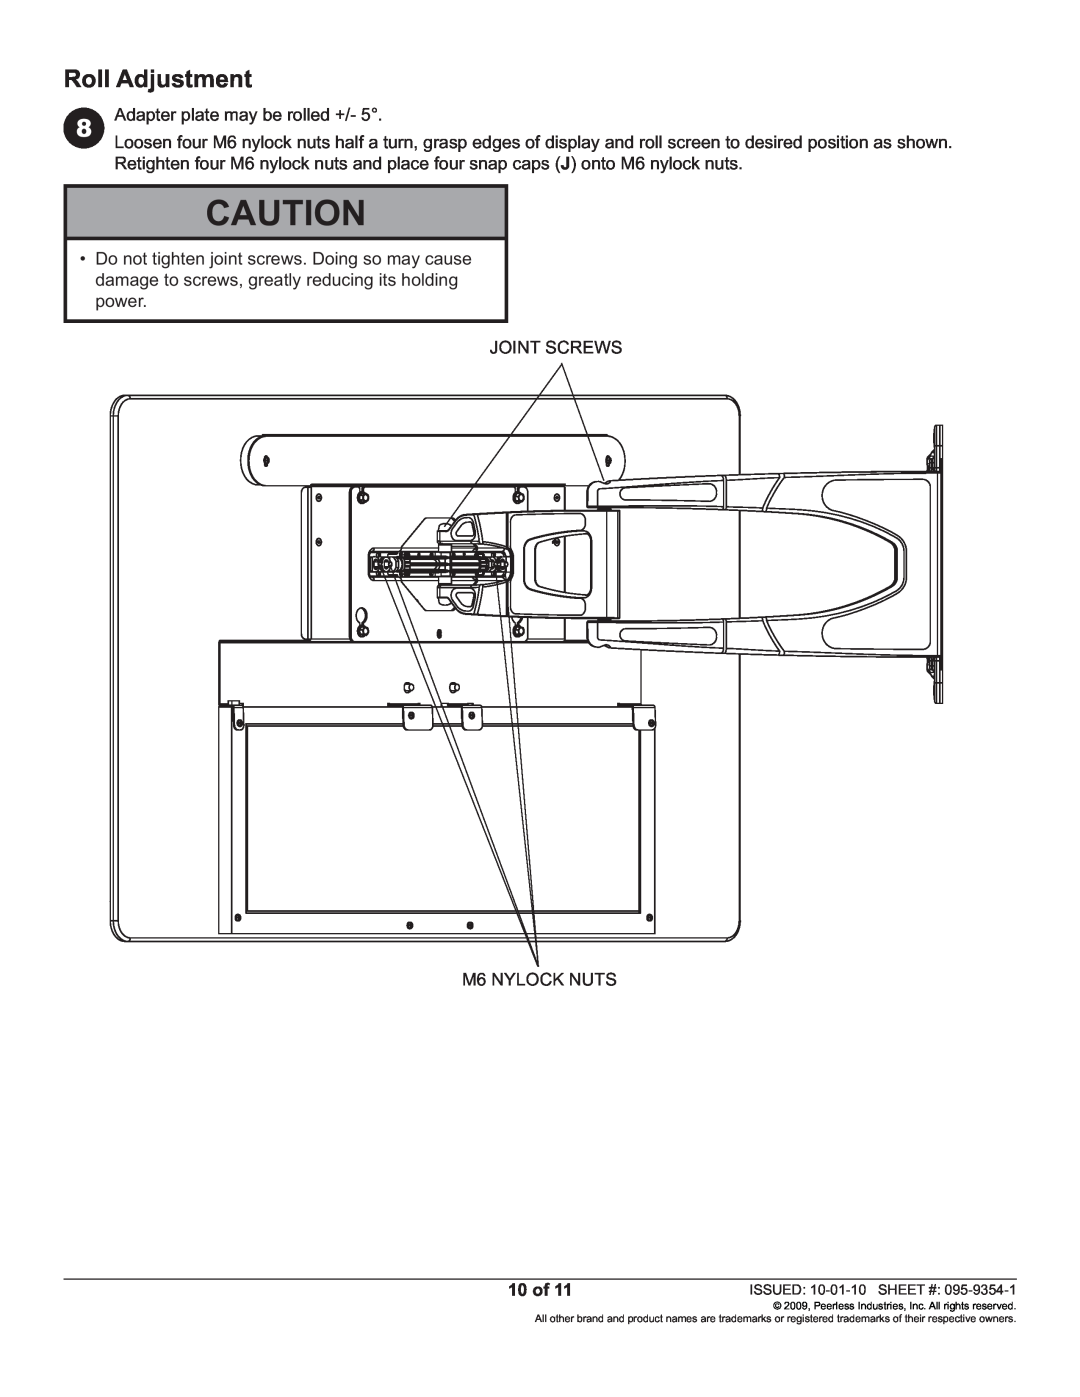 Peerless Industries SUAC9000 manual Roll Adjustment, 10 of 